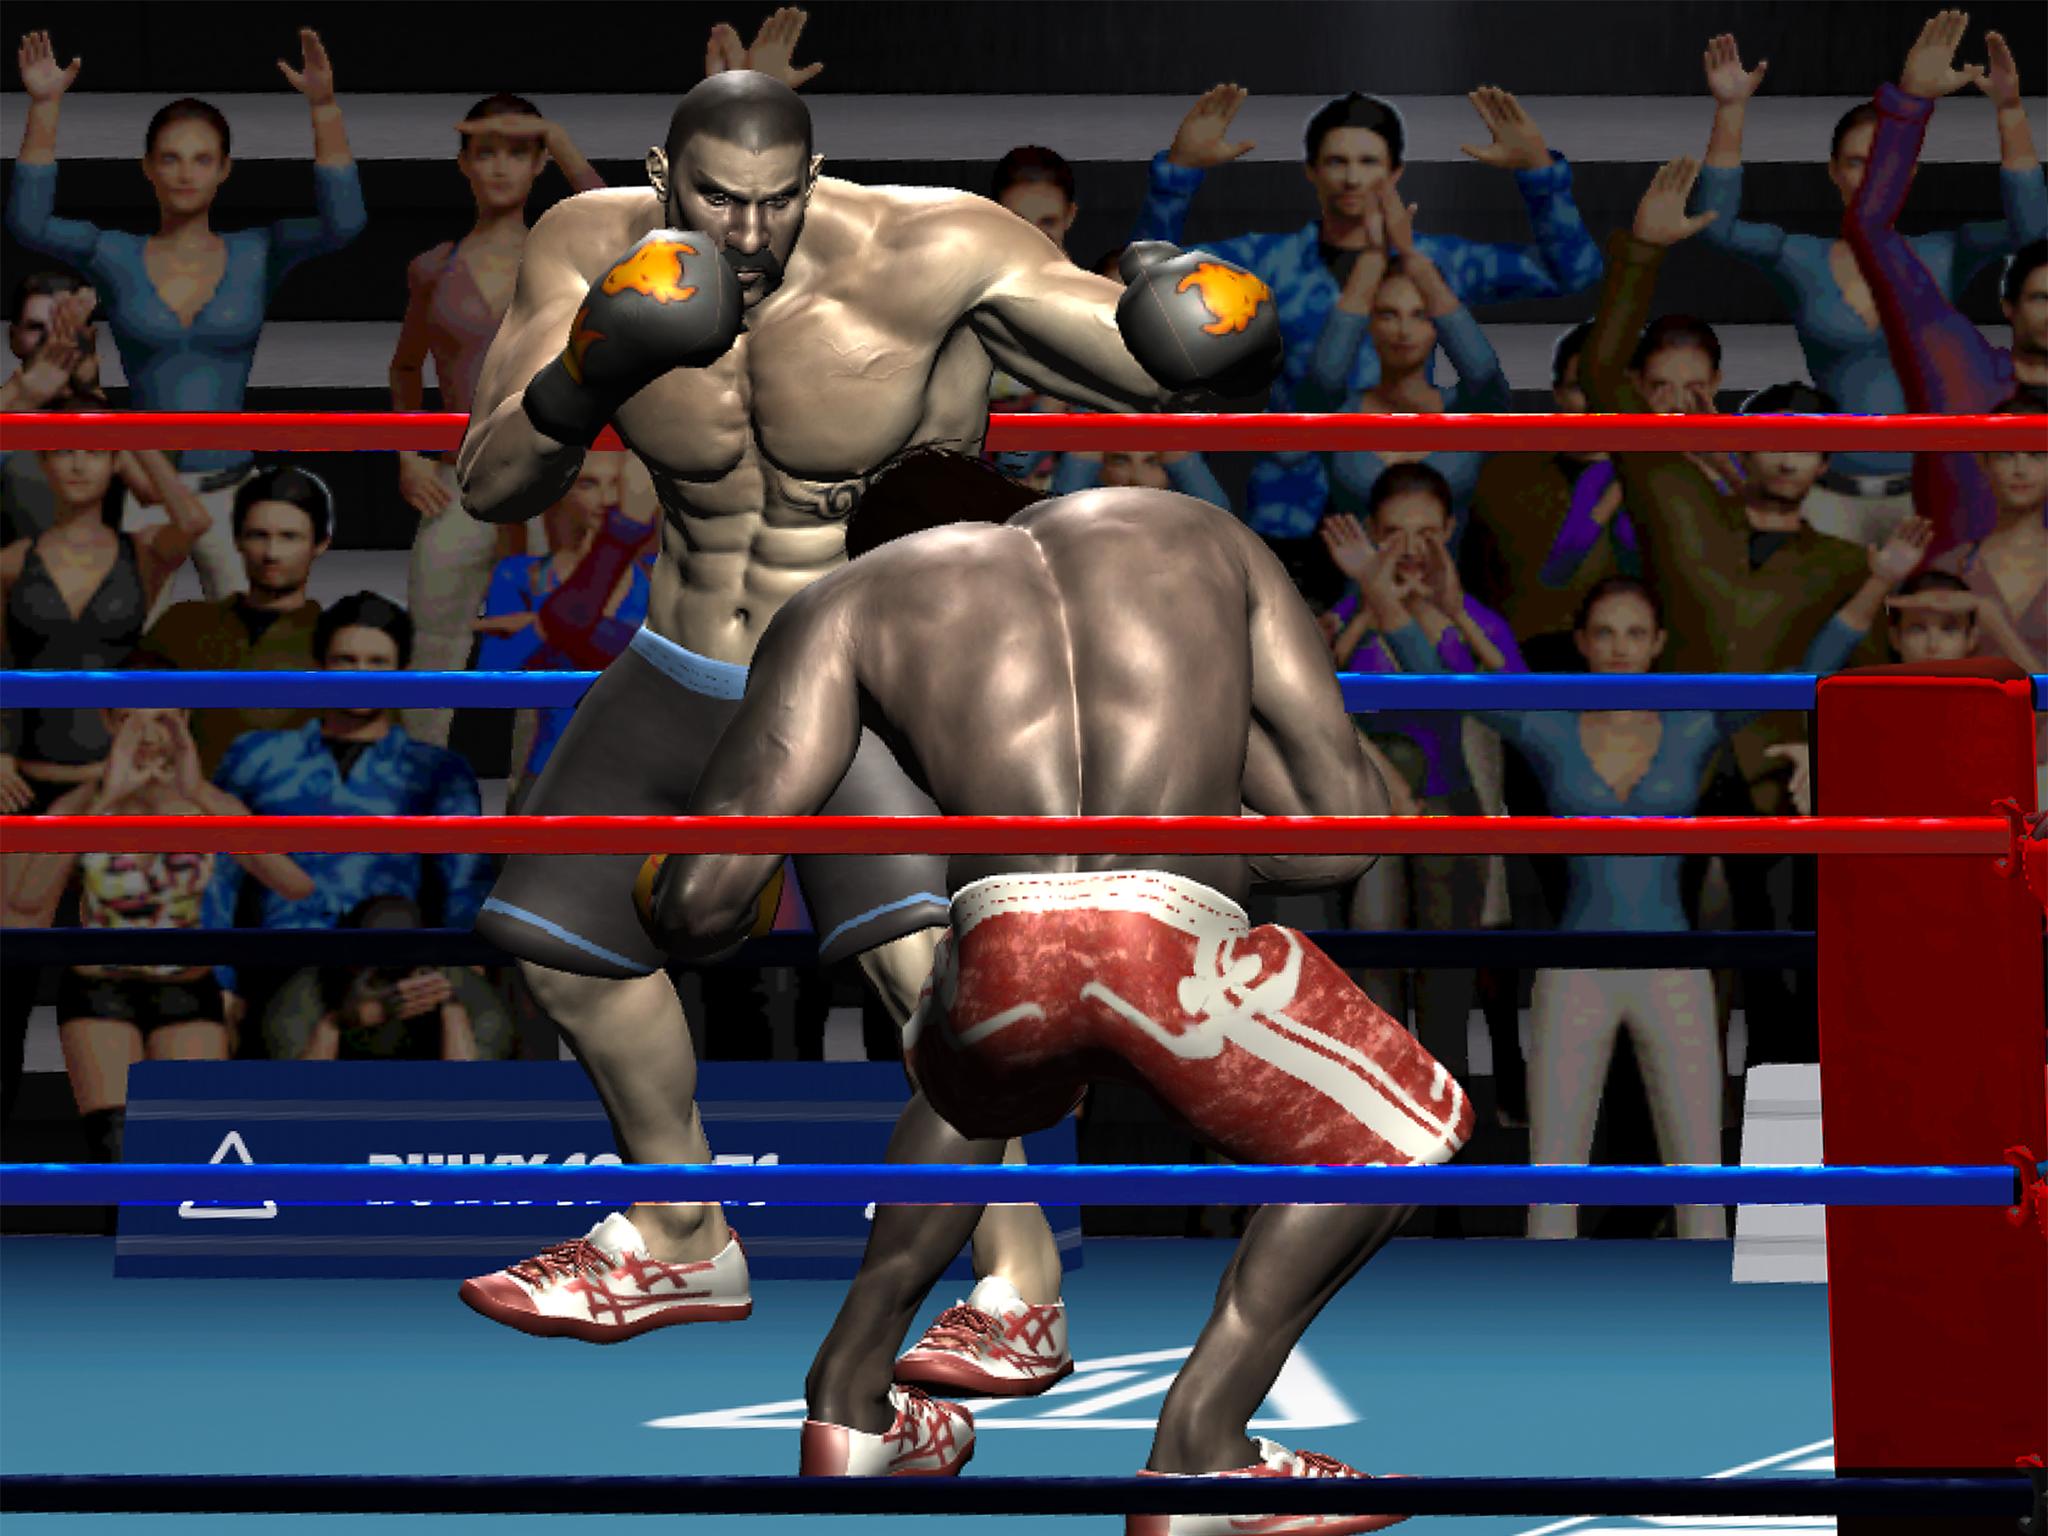 Обзор игр бокс. Boxing игра. 3d boks игра. Игры про боксы про бокс. Игра бокс 2010.